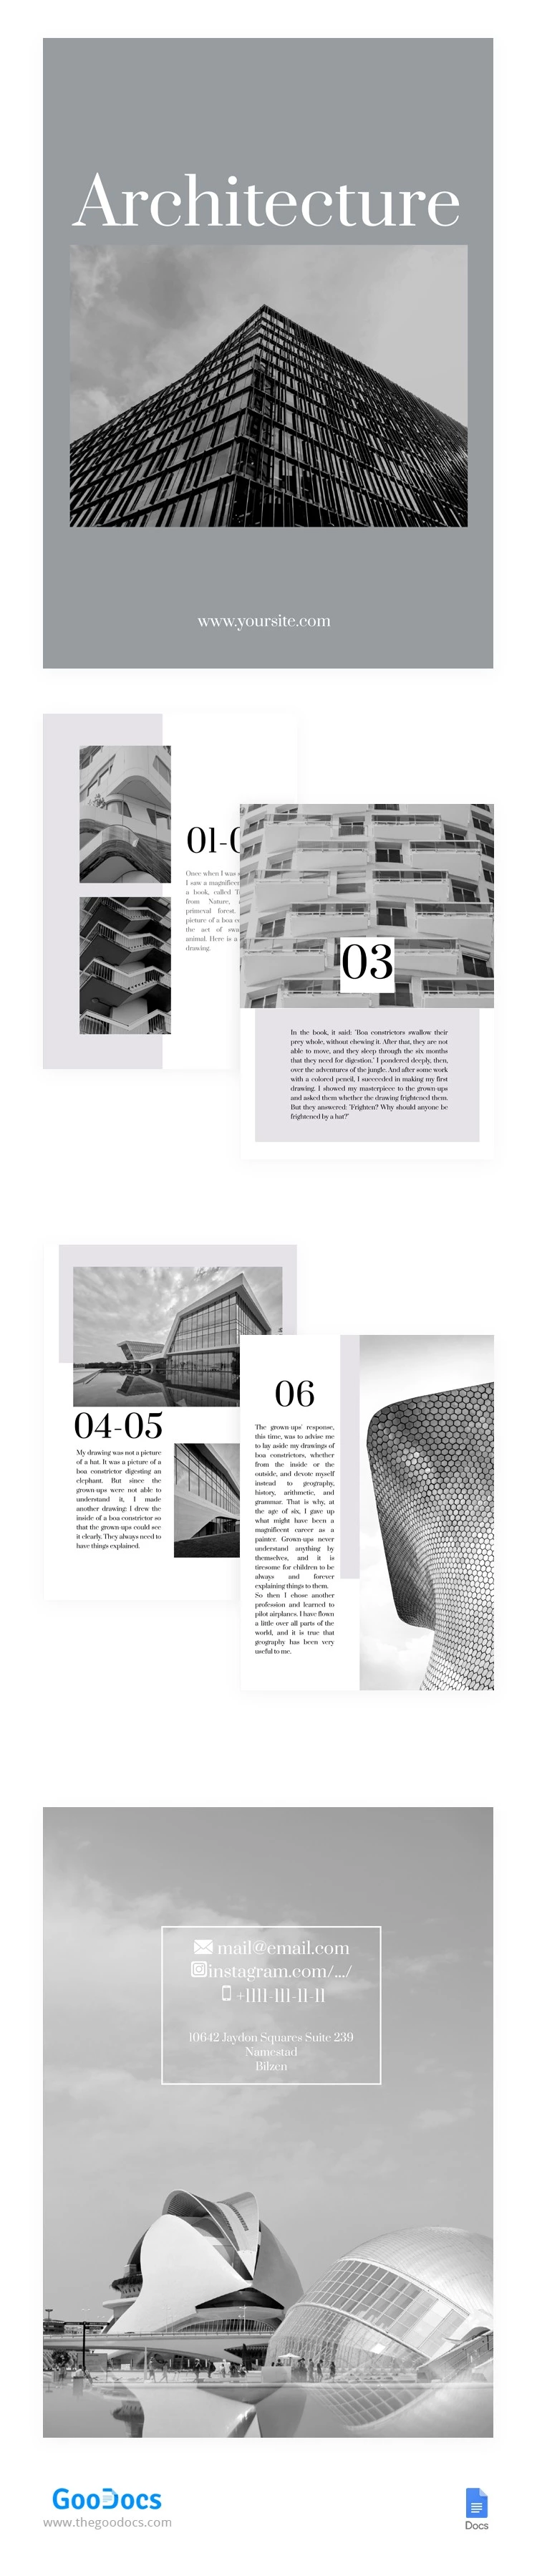 Revista de Arquitectura - free Google Docs Template - 10062152